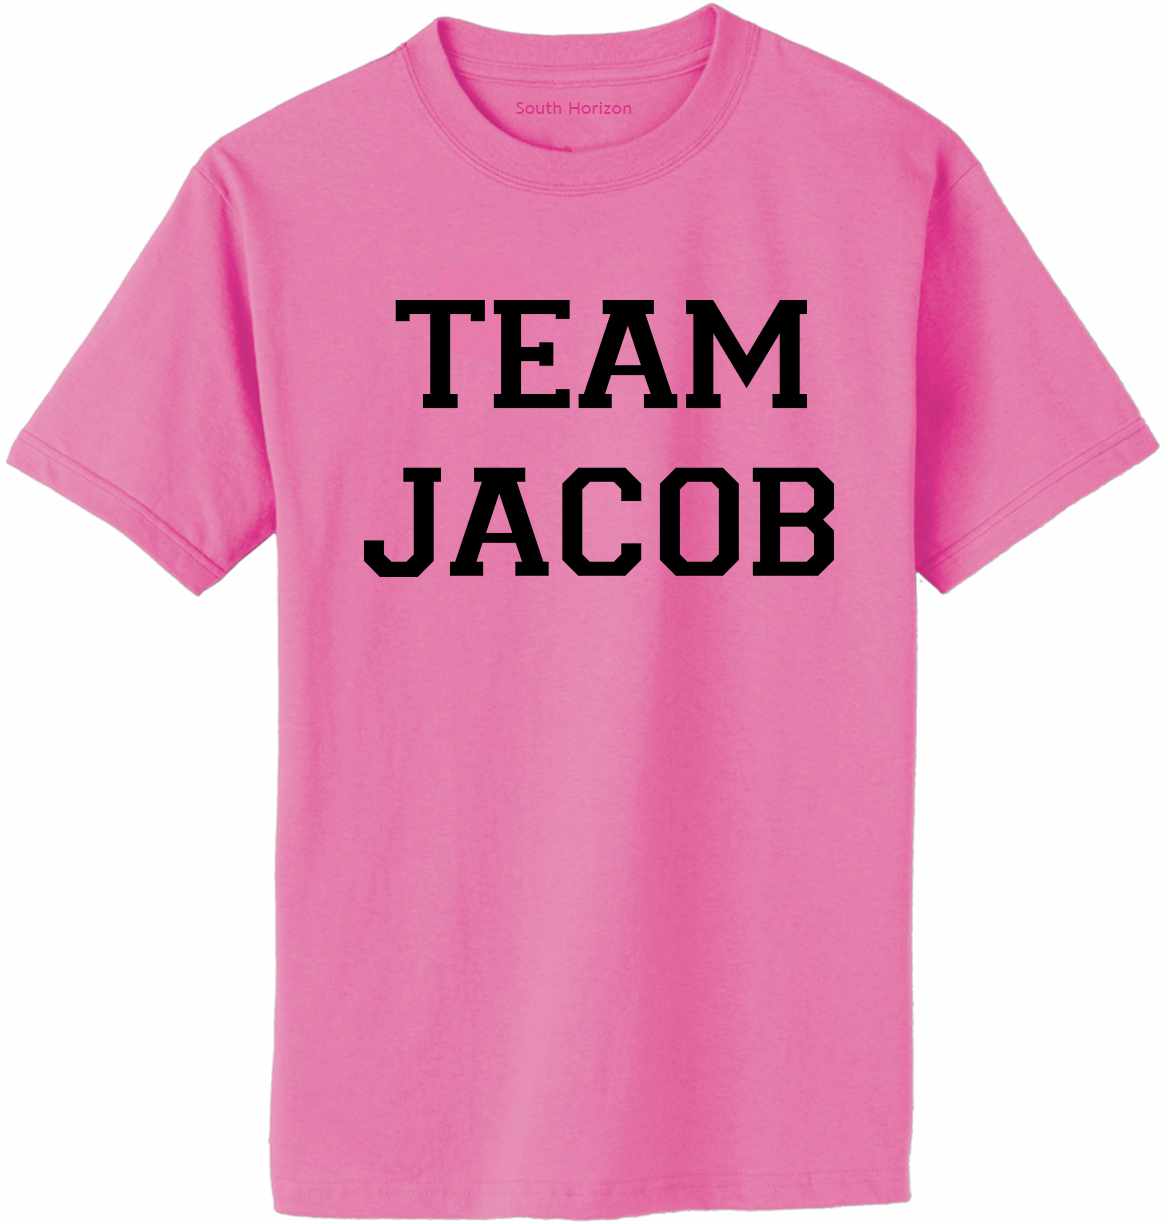 TEAM JACOB Adult T-Shirt (#249-1)